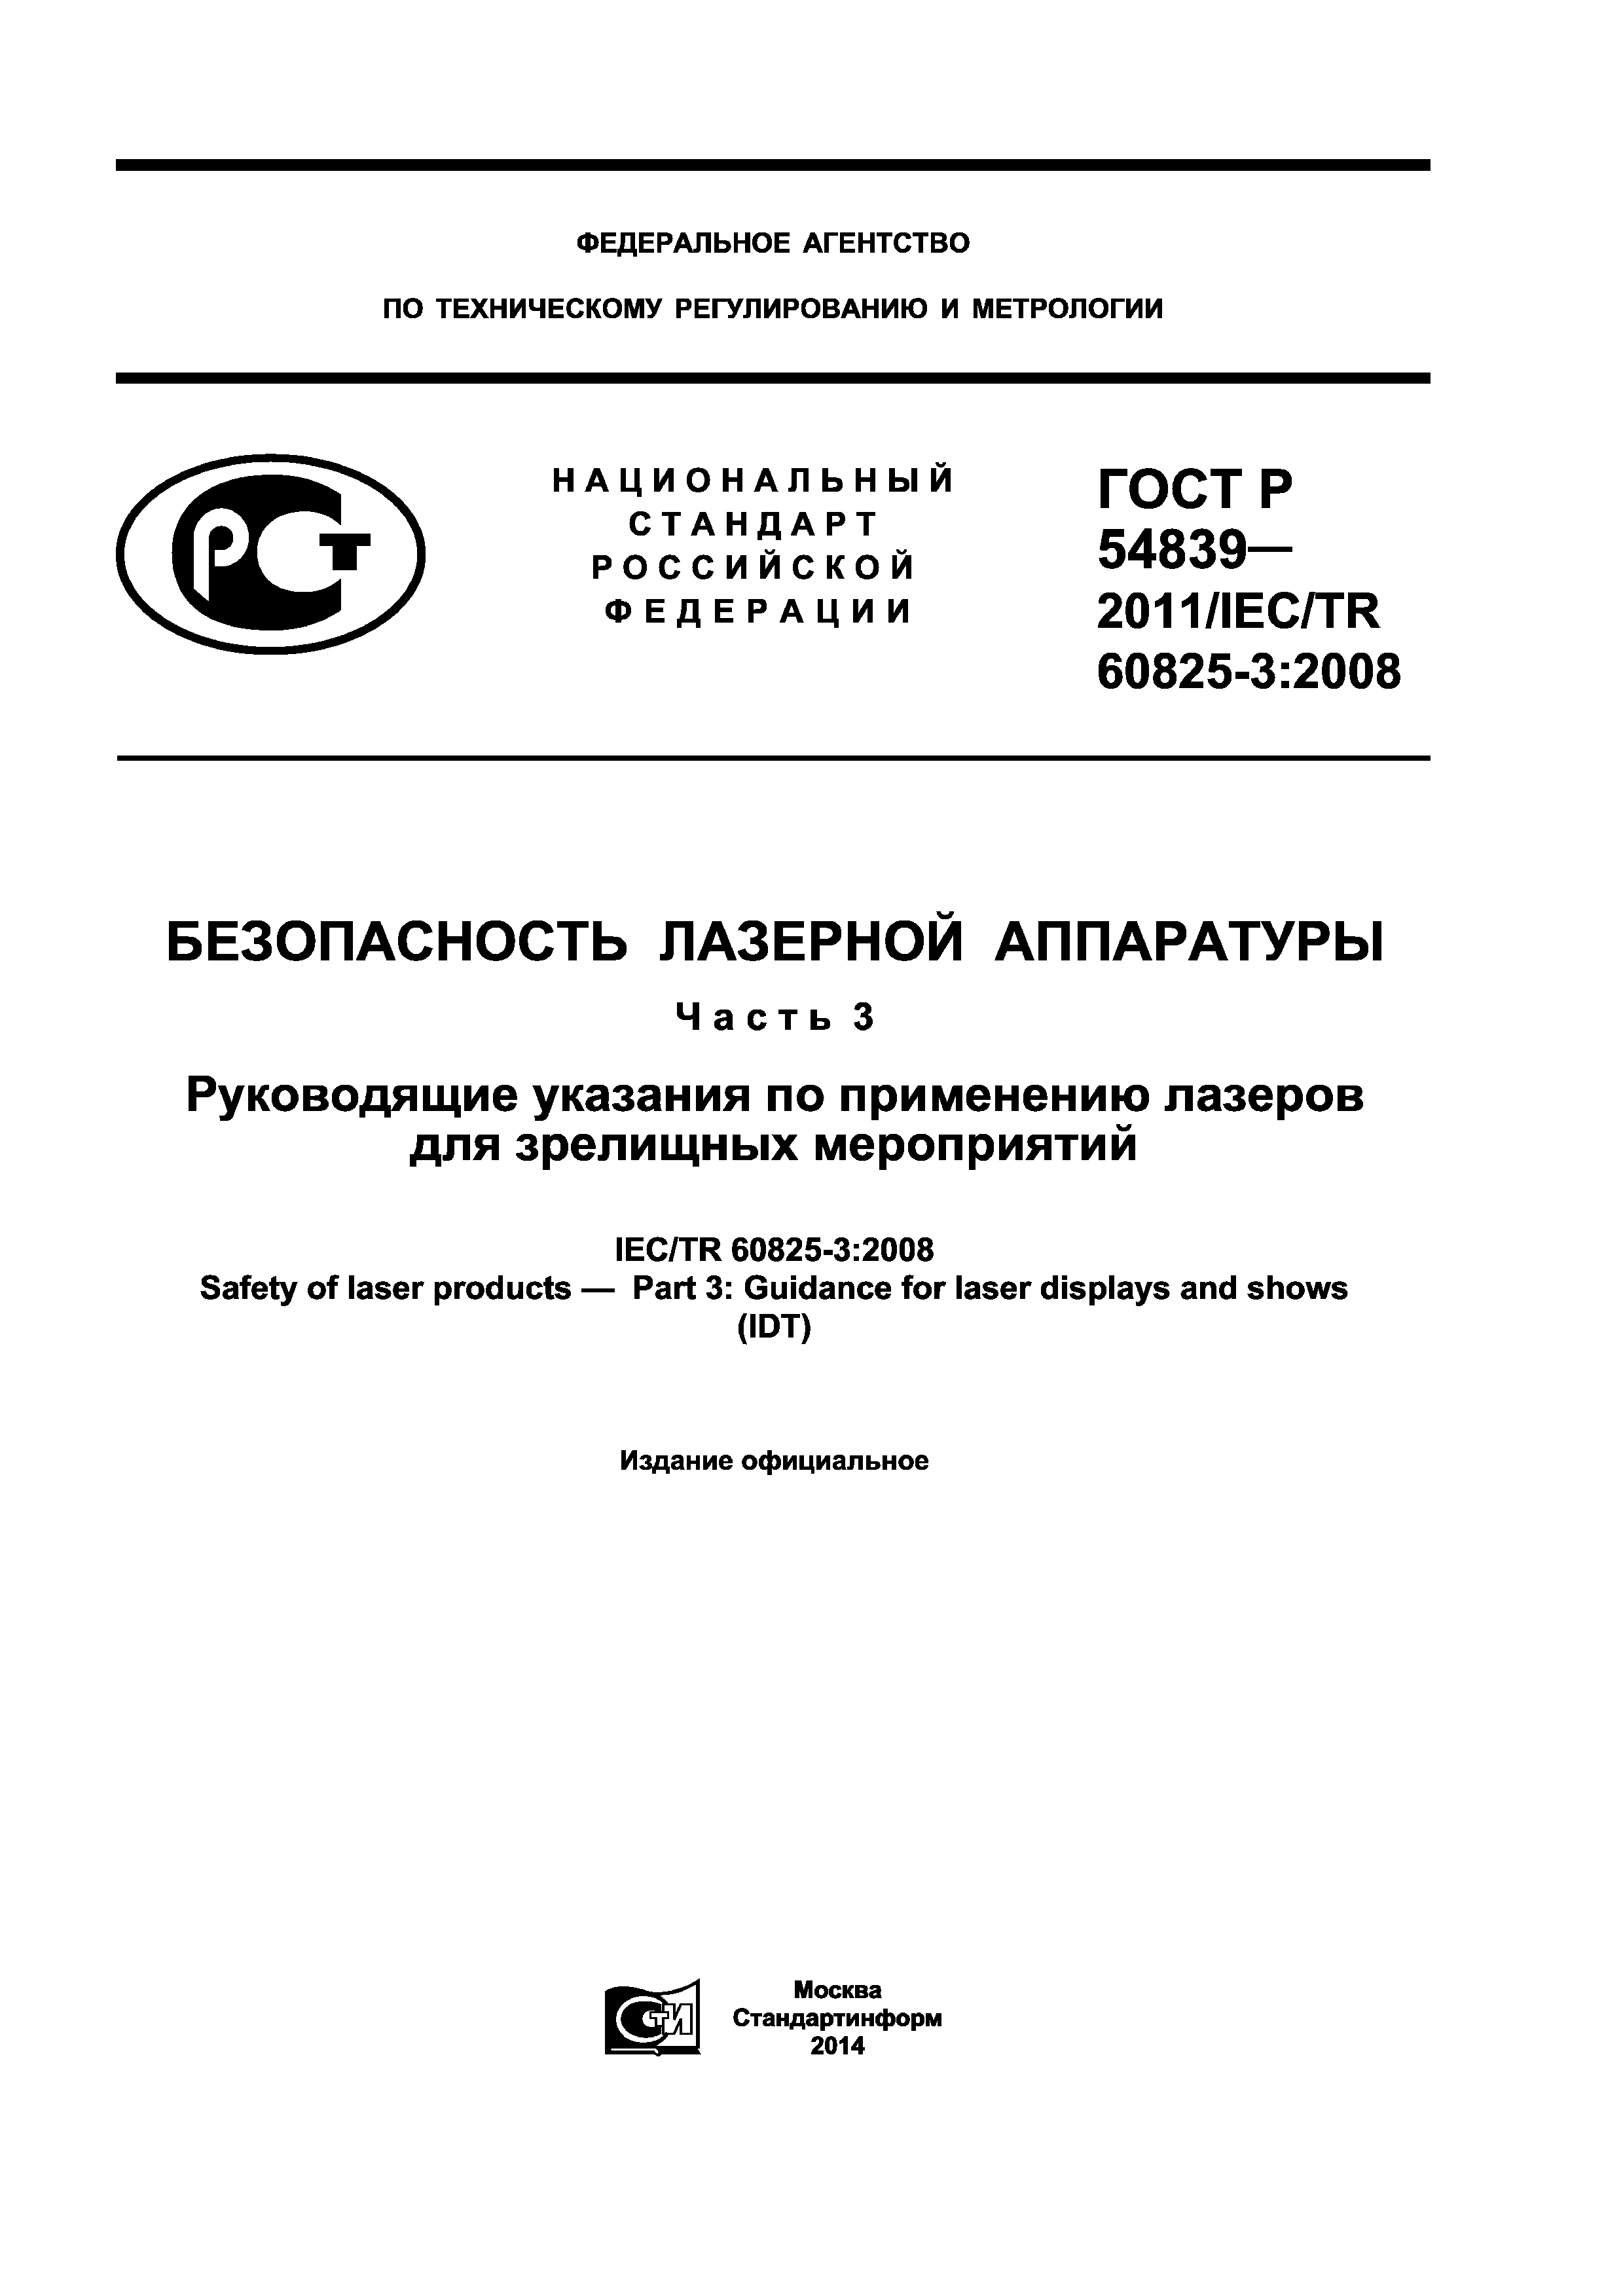 ГОСТ Р 54839-2011